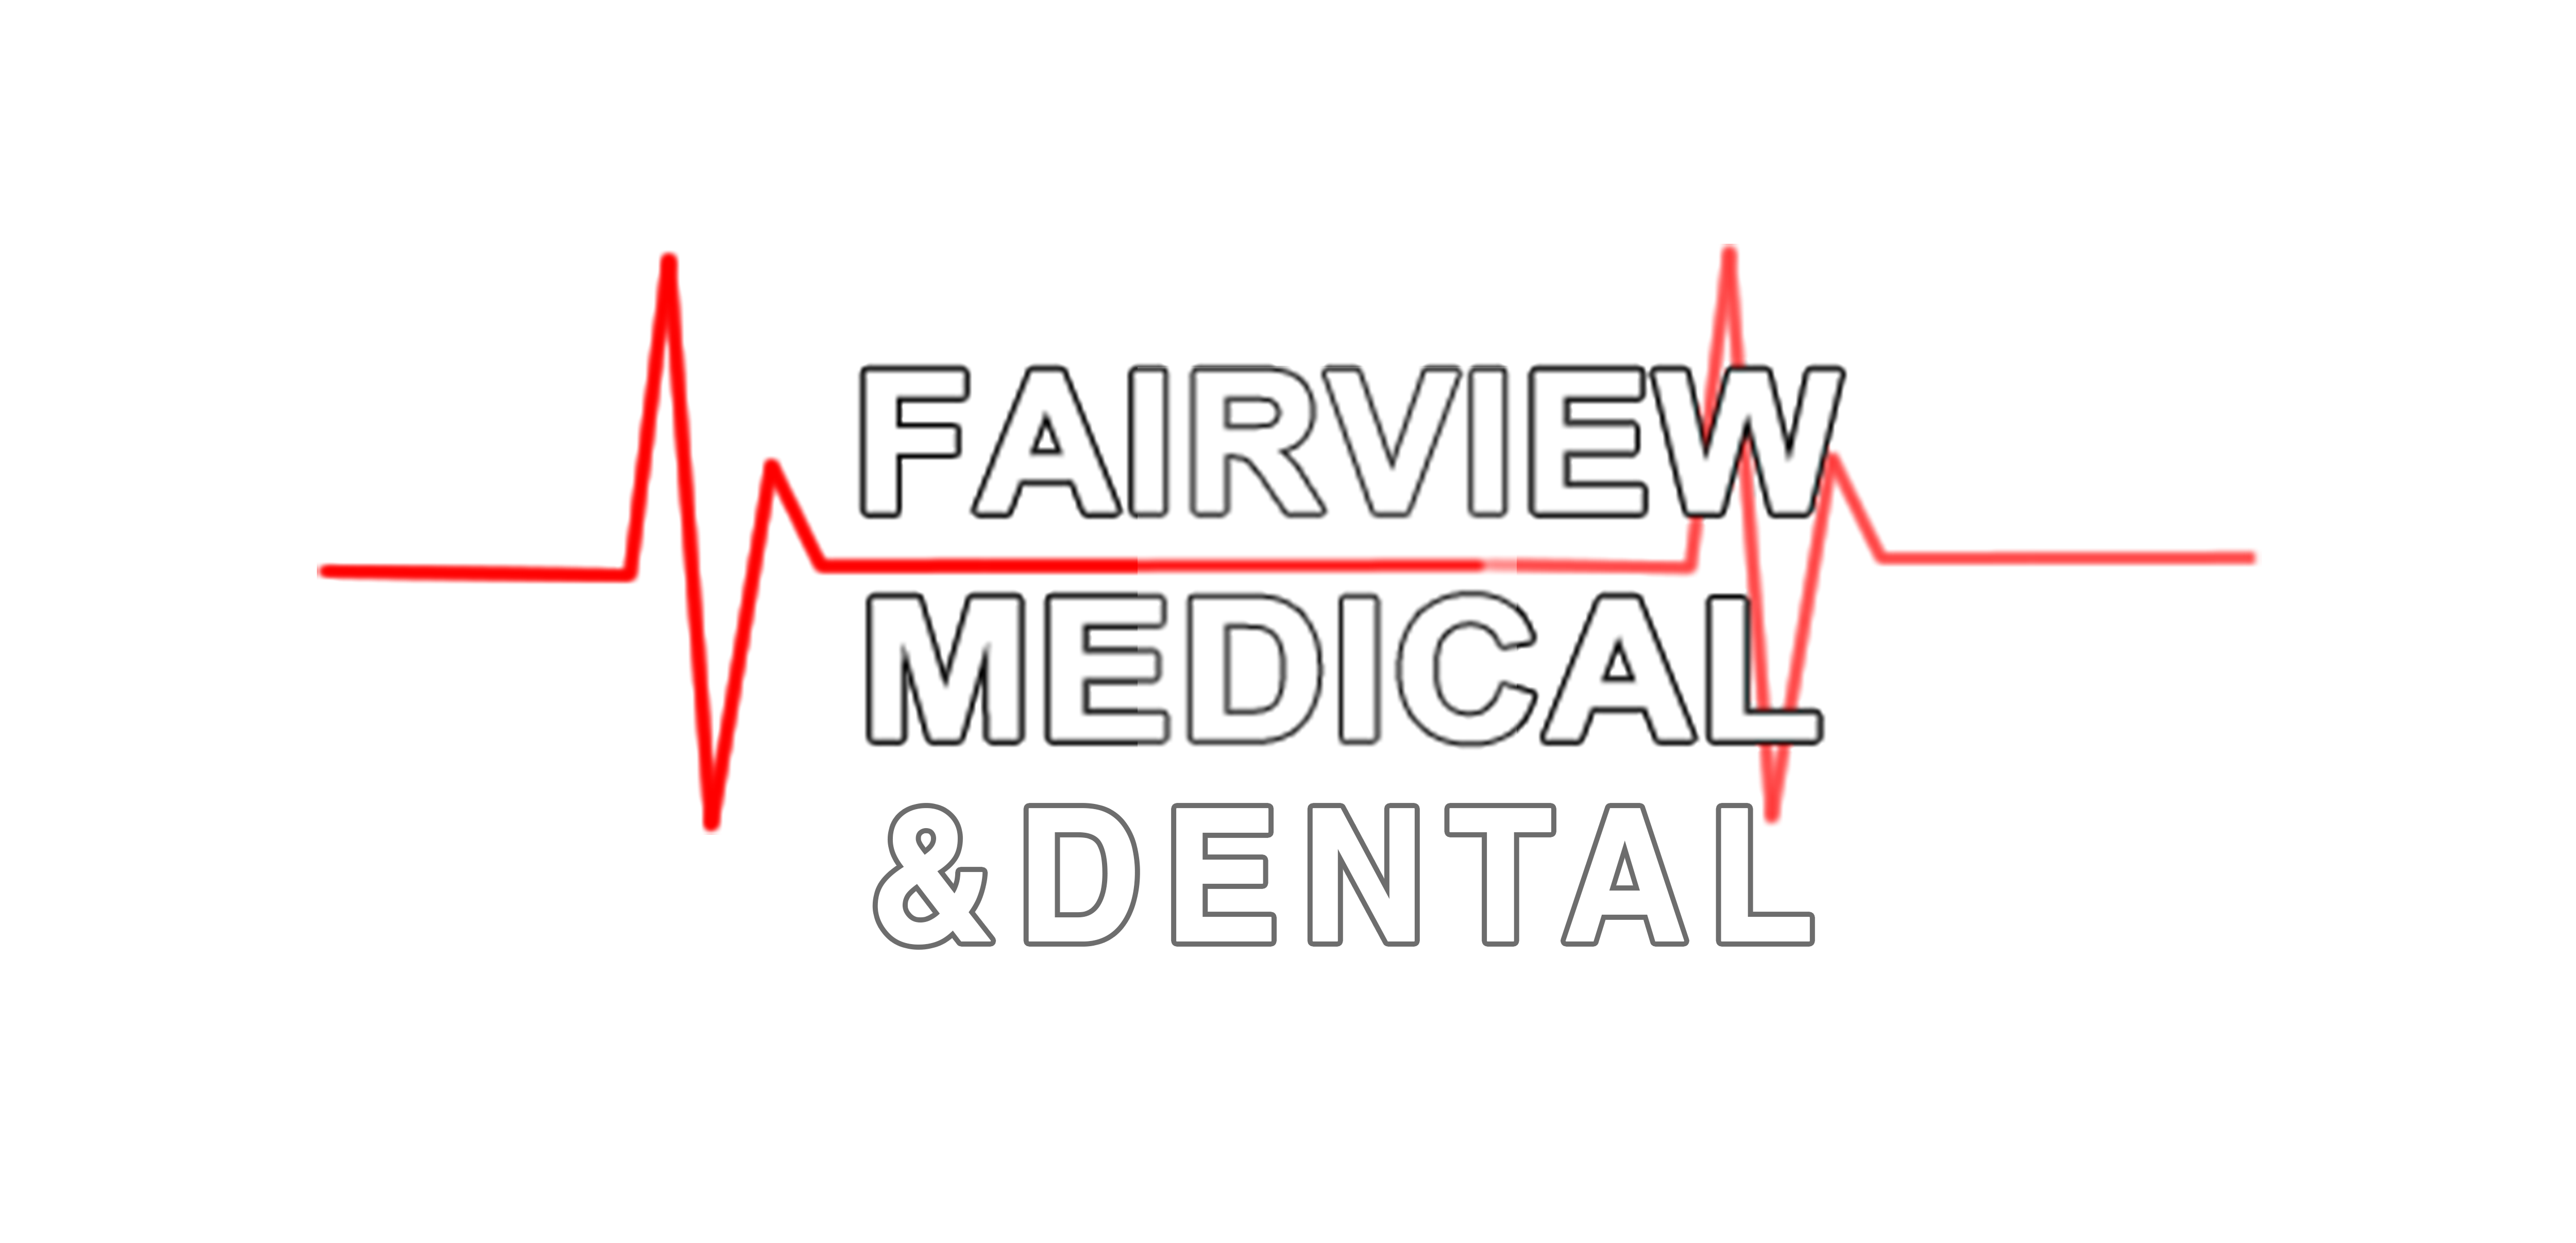 Fairview Medical & Dental